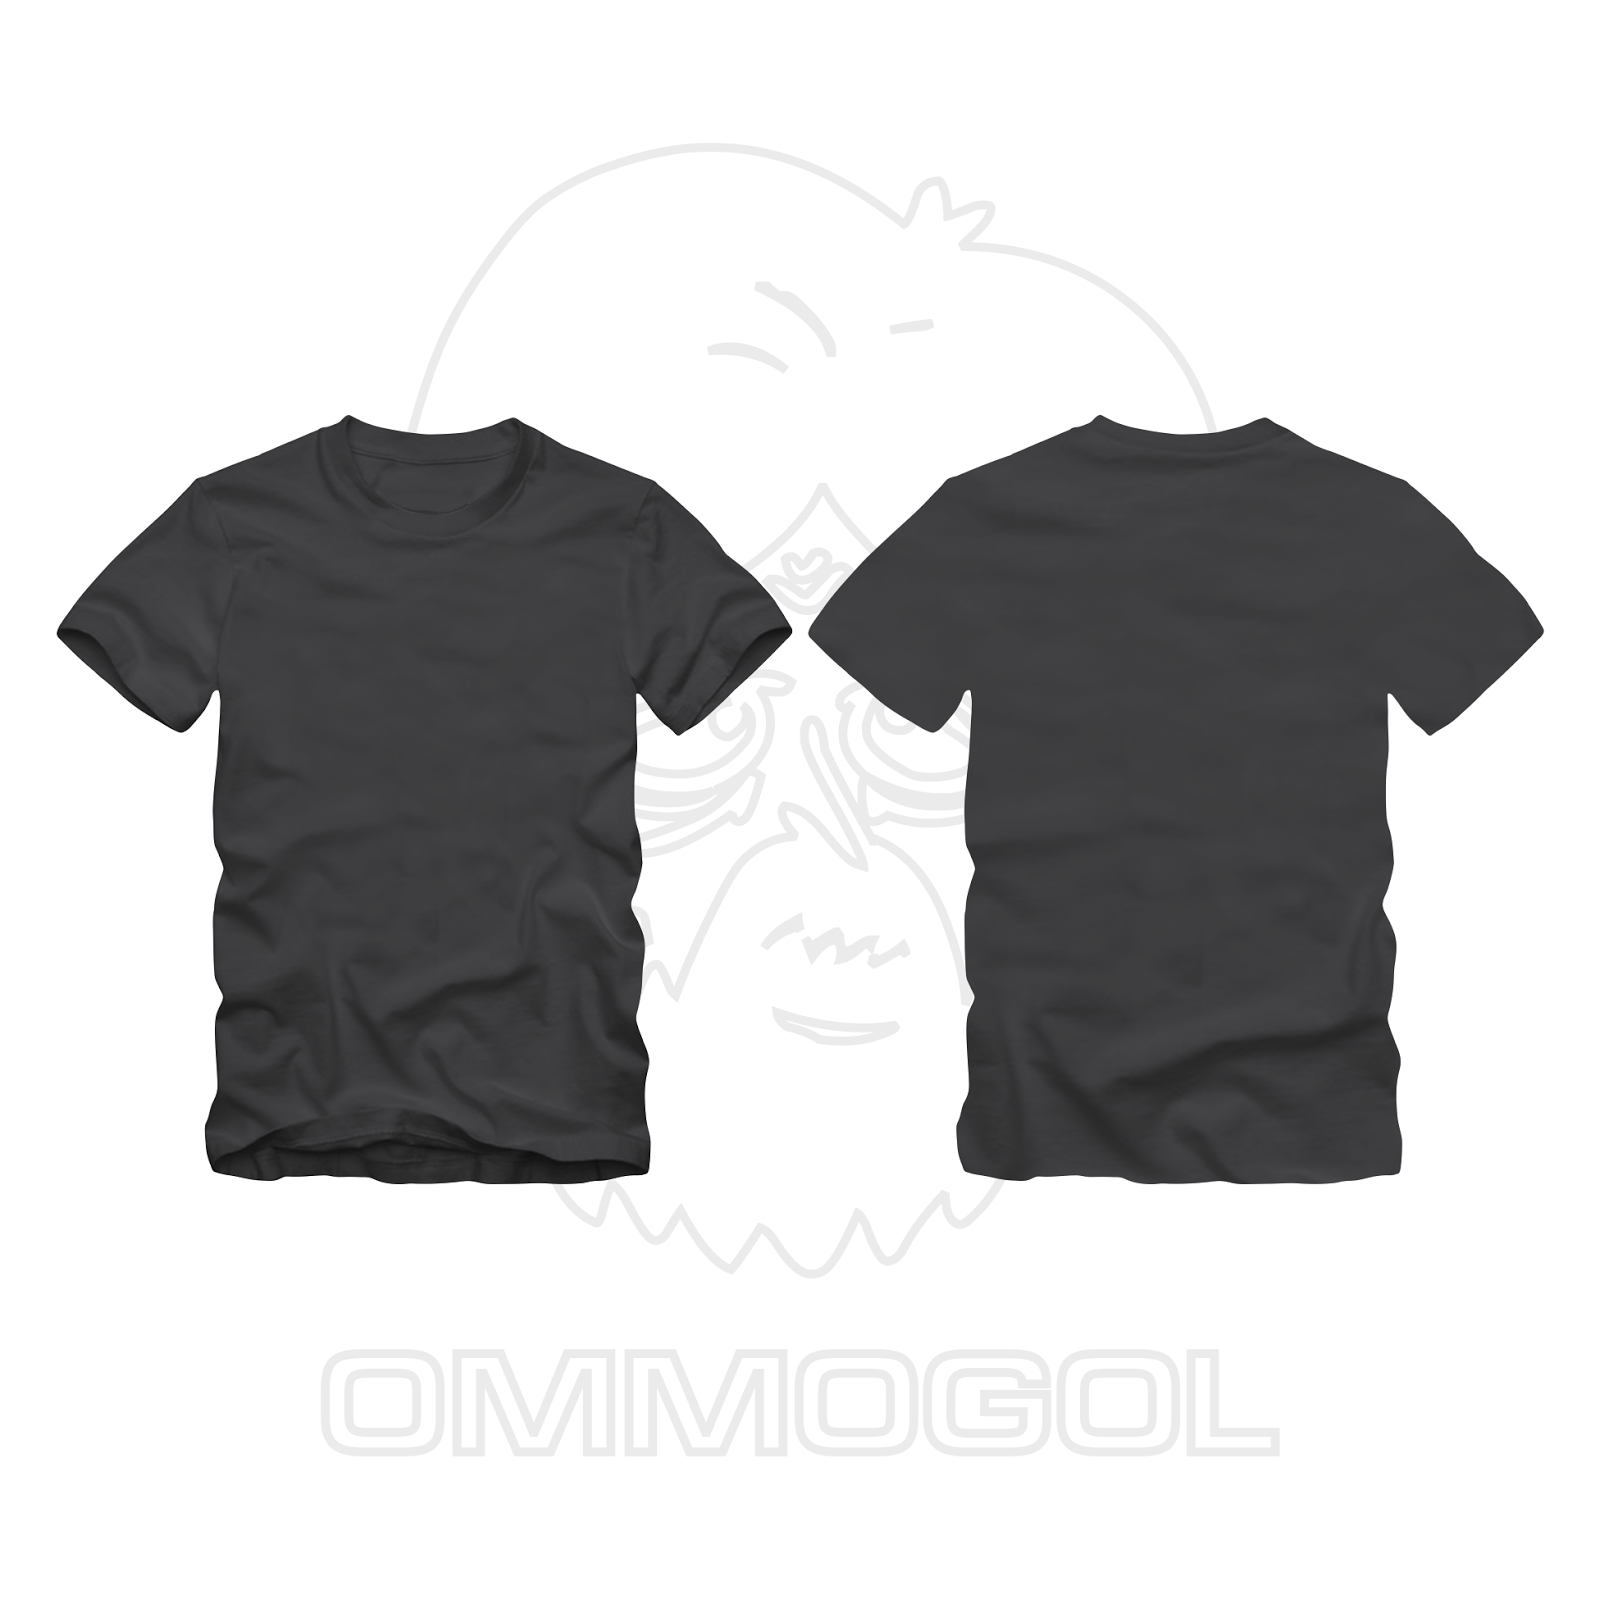 Download Template Kaos Blank Tshirt Desain Kaos Vector Cdr Ai